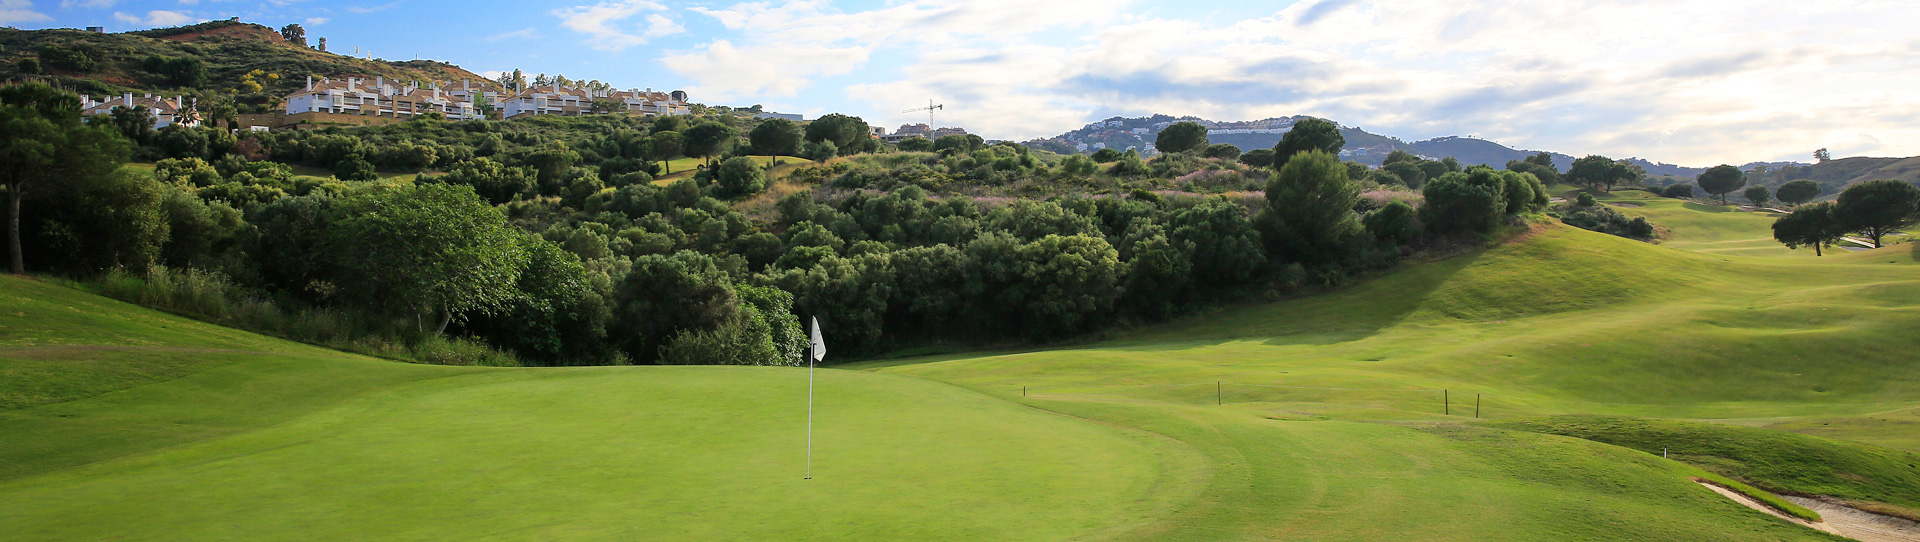 Spain golf holidays - La Cala Golf Passport - Photo 2